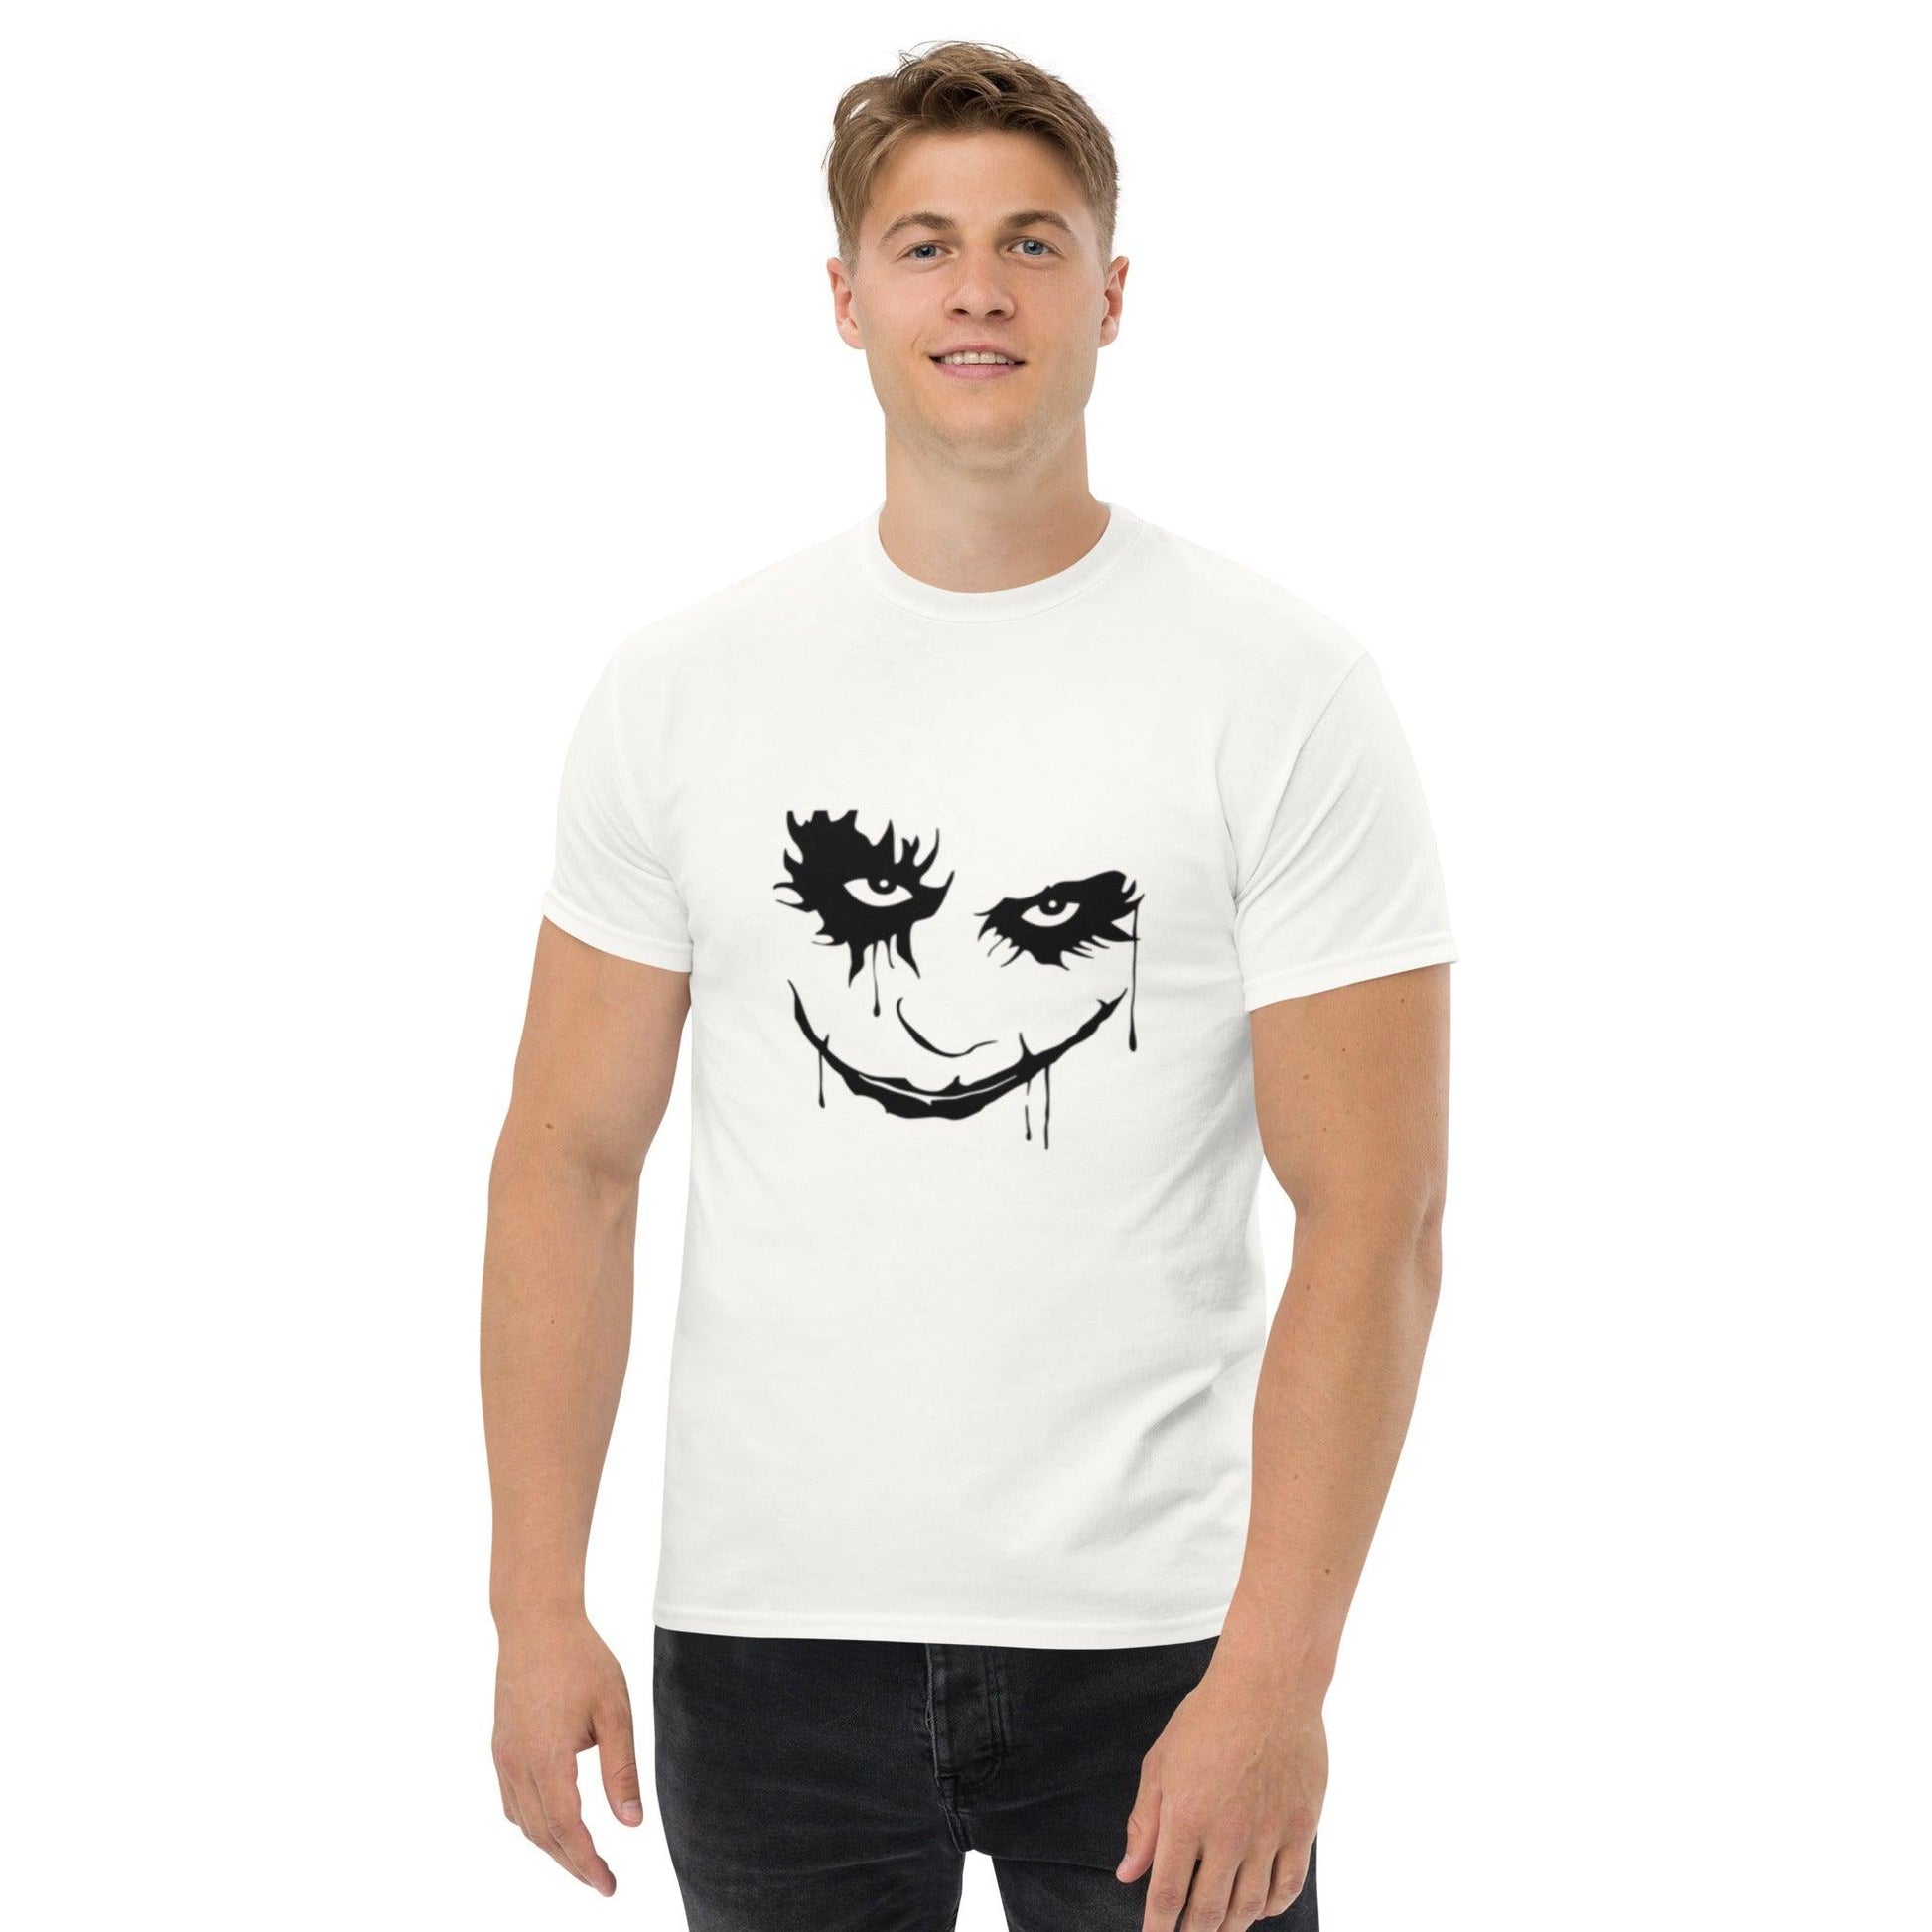 JOKER SMILE - Anarchyca-clothing